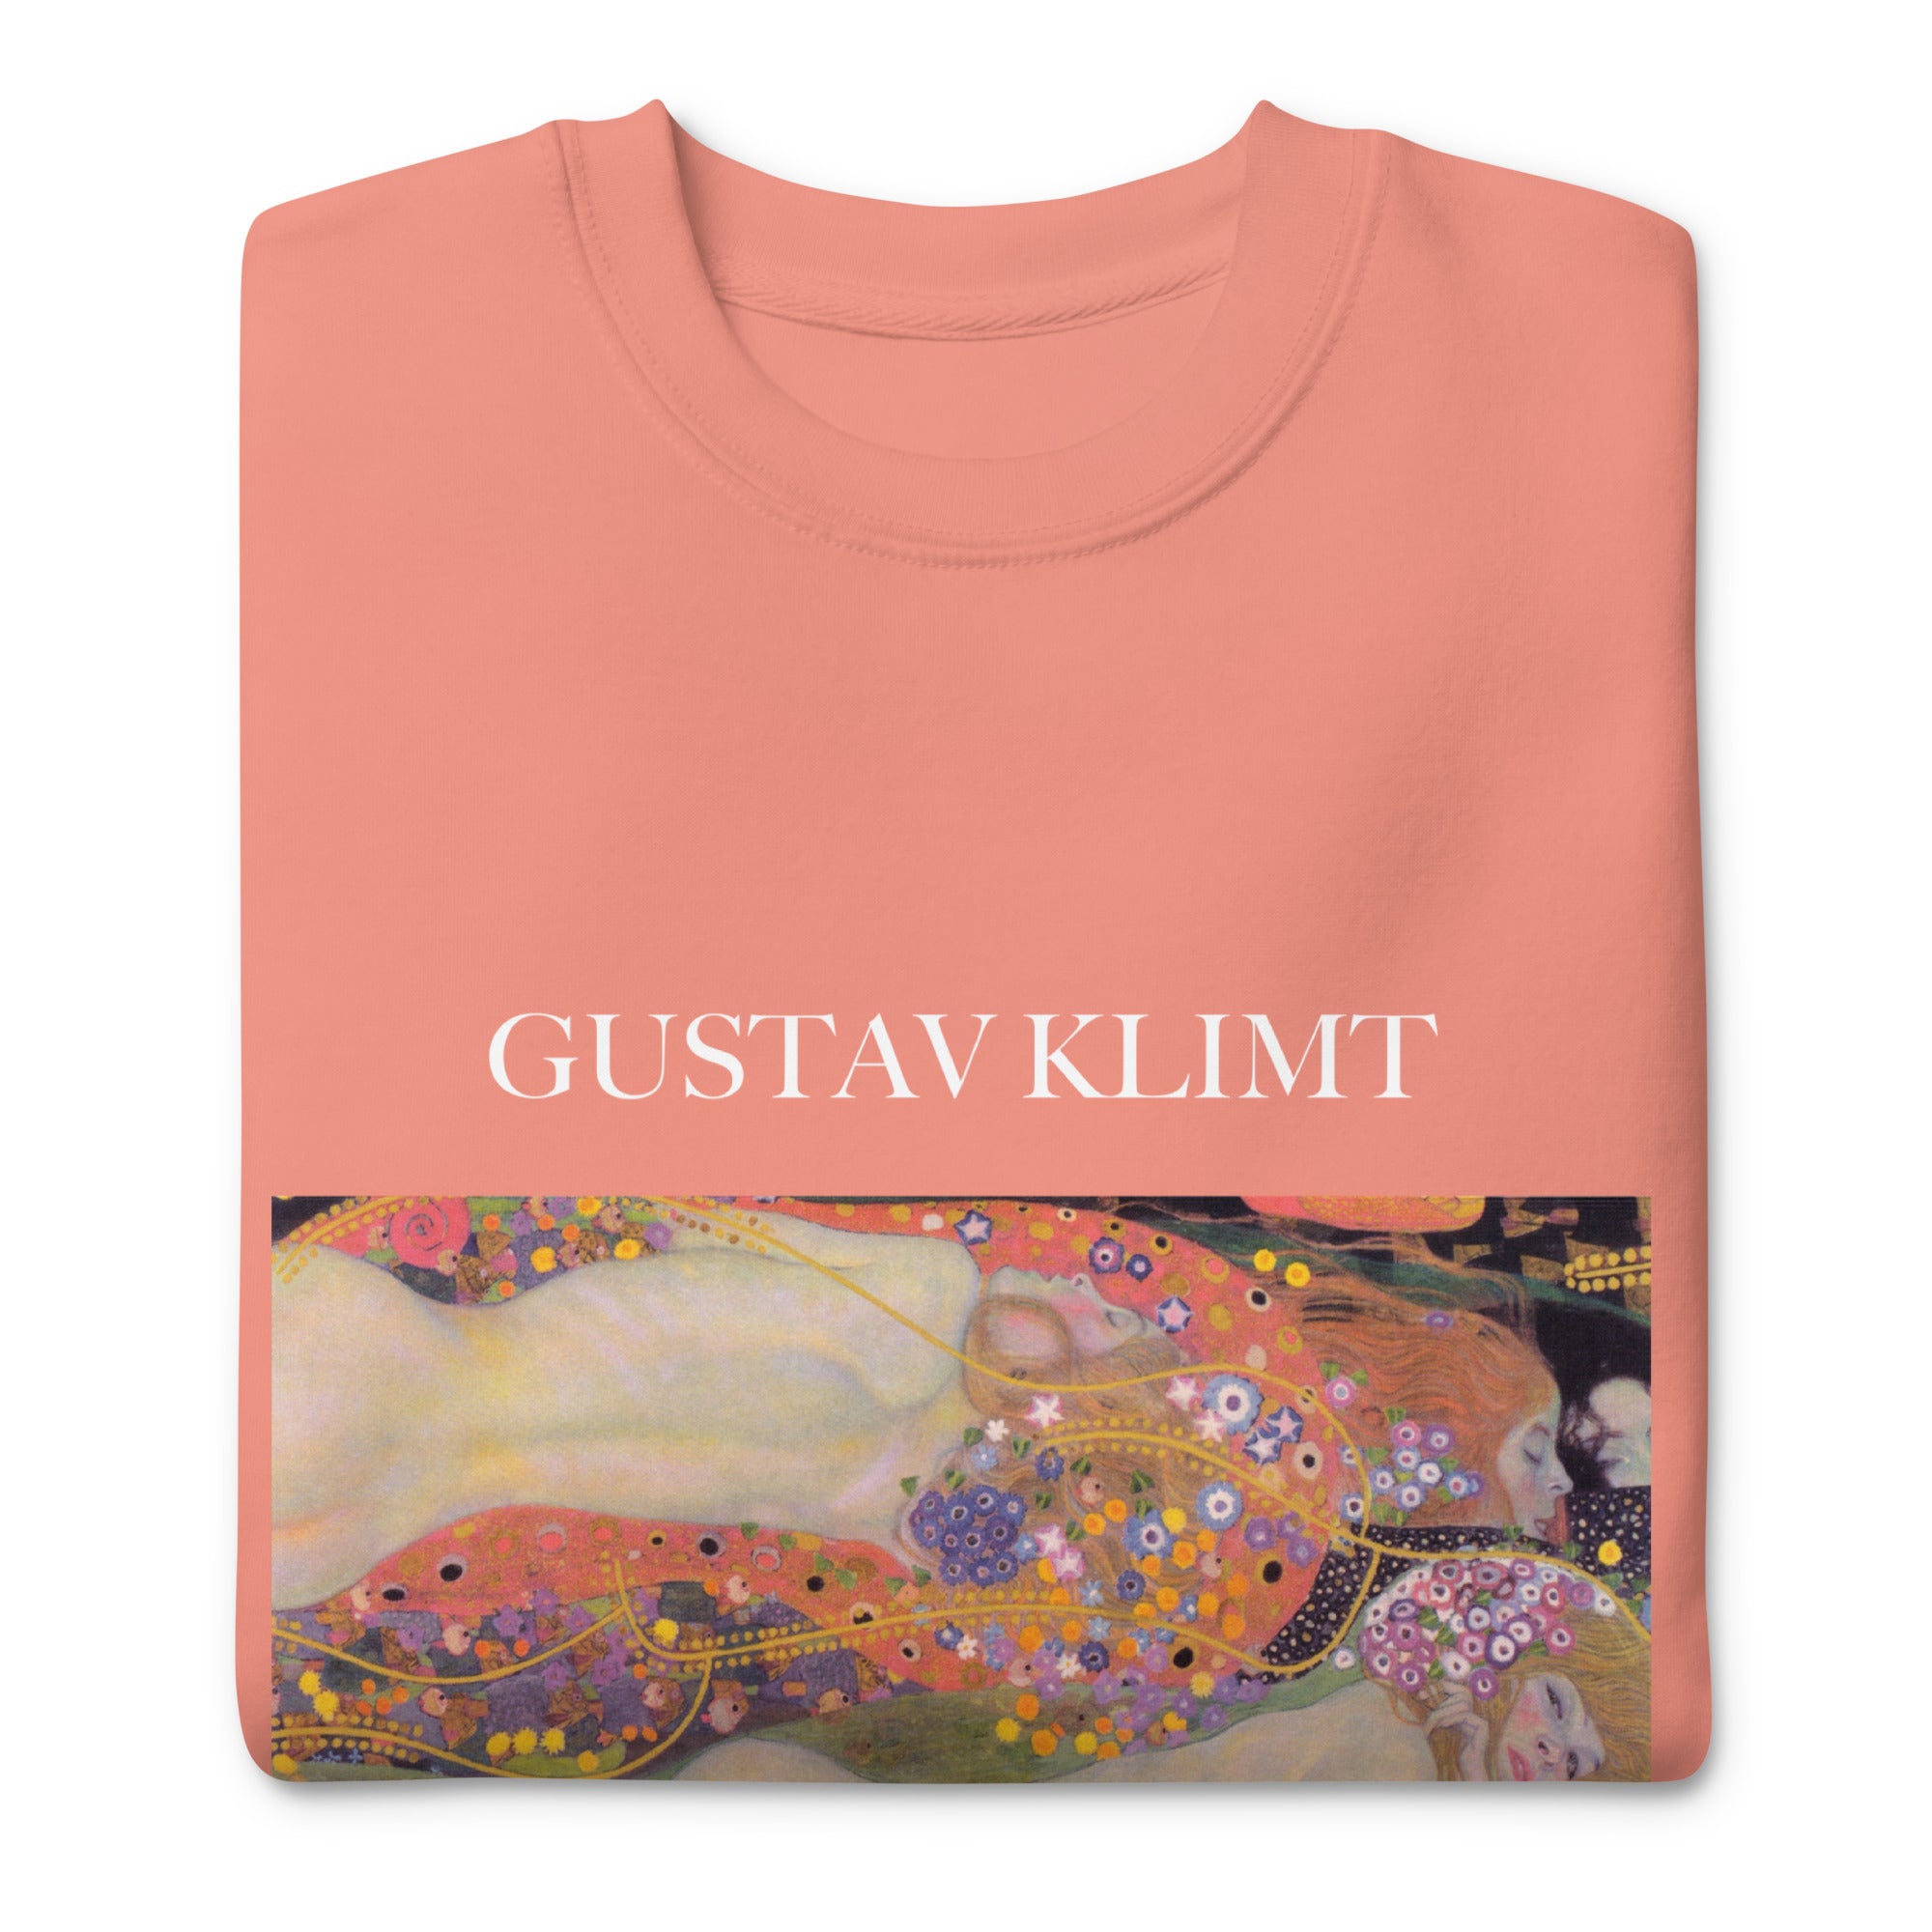 Gustav Klimt „Wasserschlangen II“ Berühmtes Gemälde Sweatshirt | Unisex Premium Sweatshirt